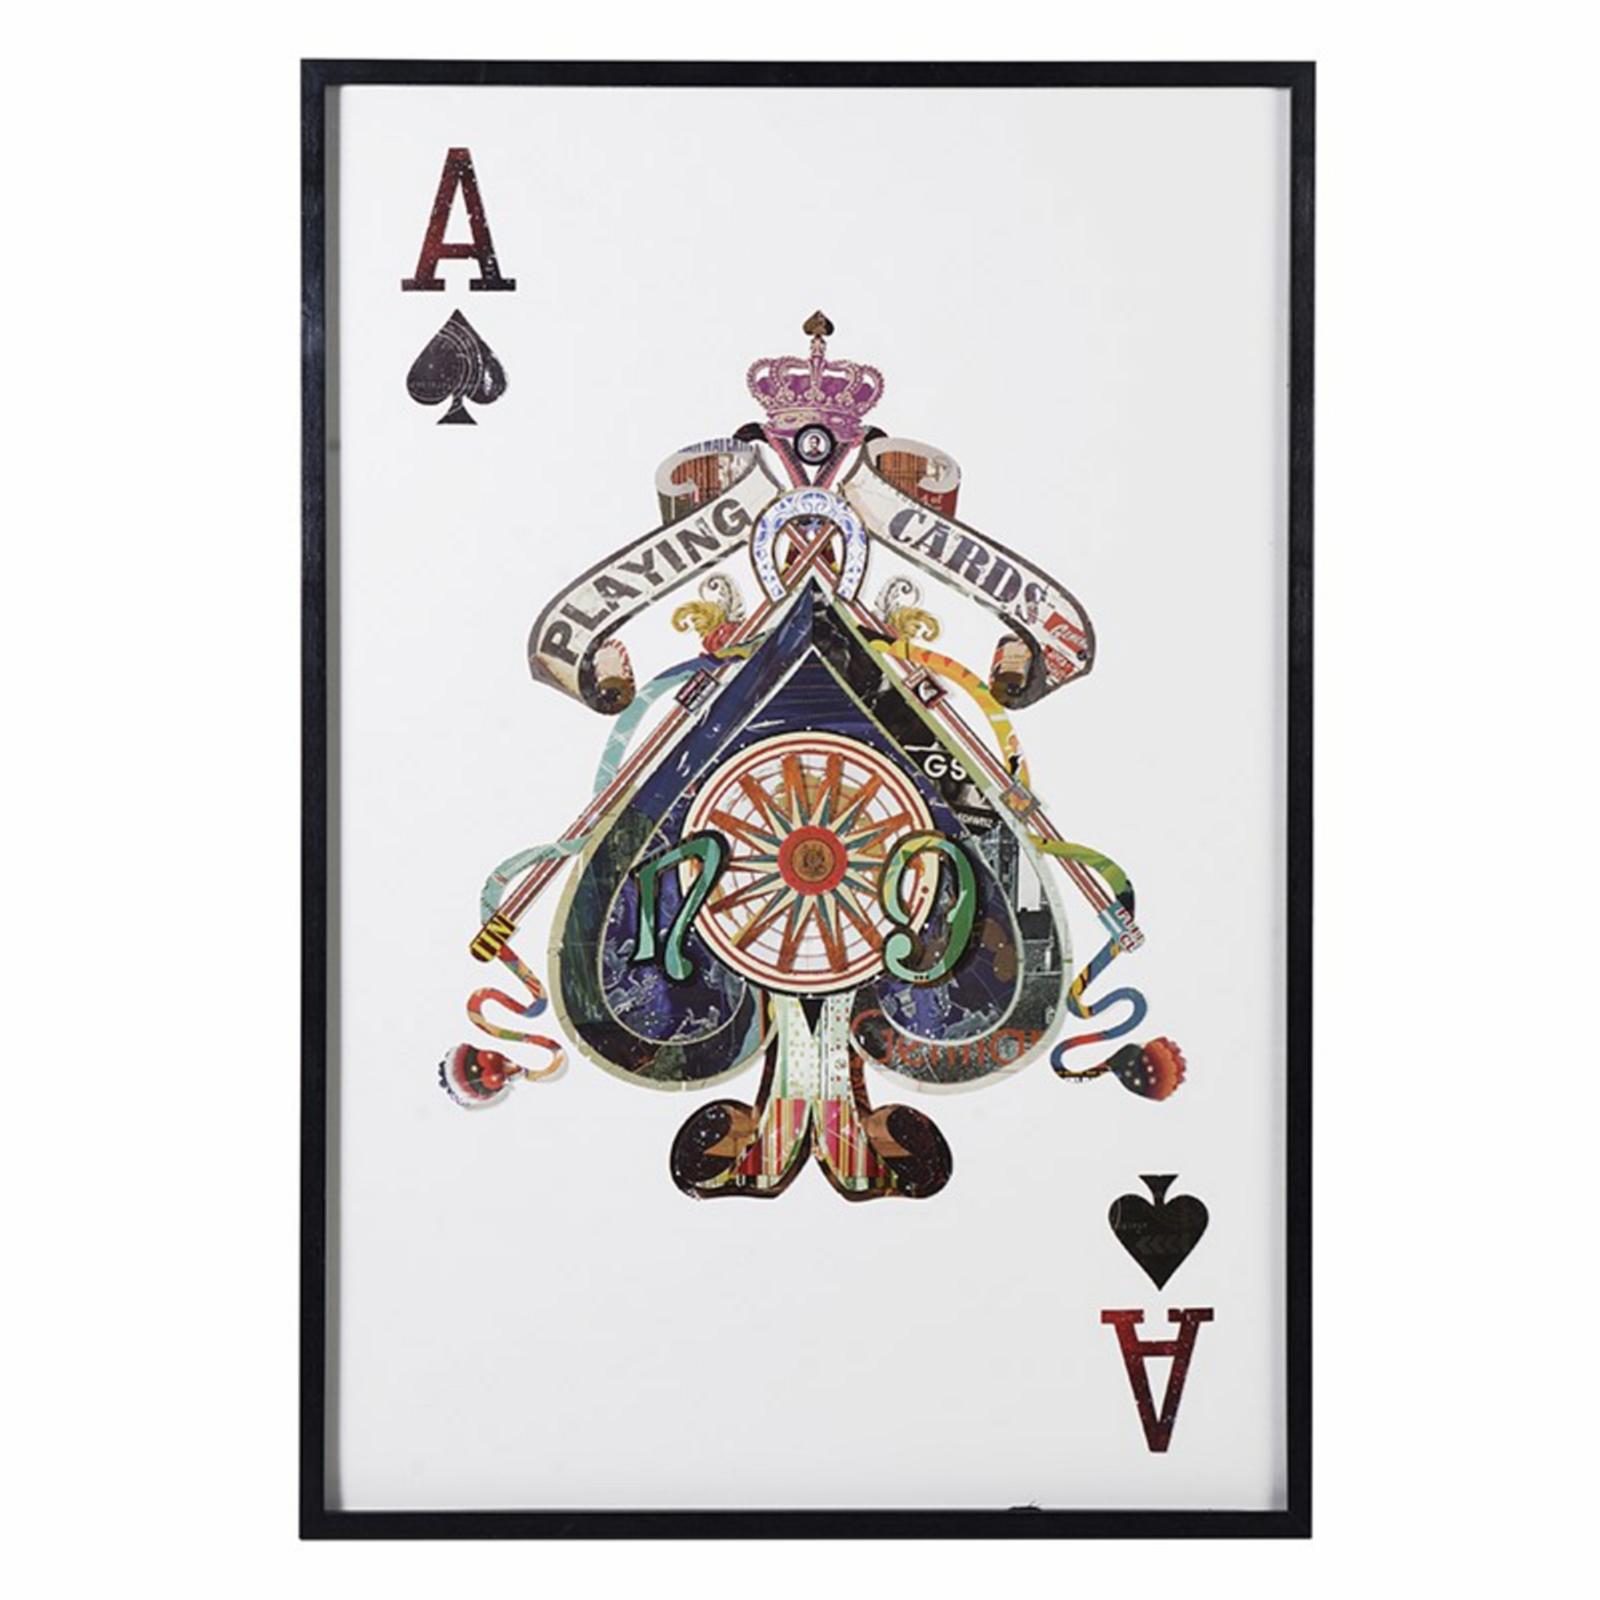 ace of spades card